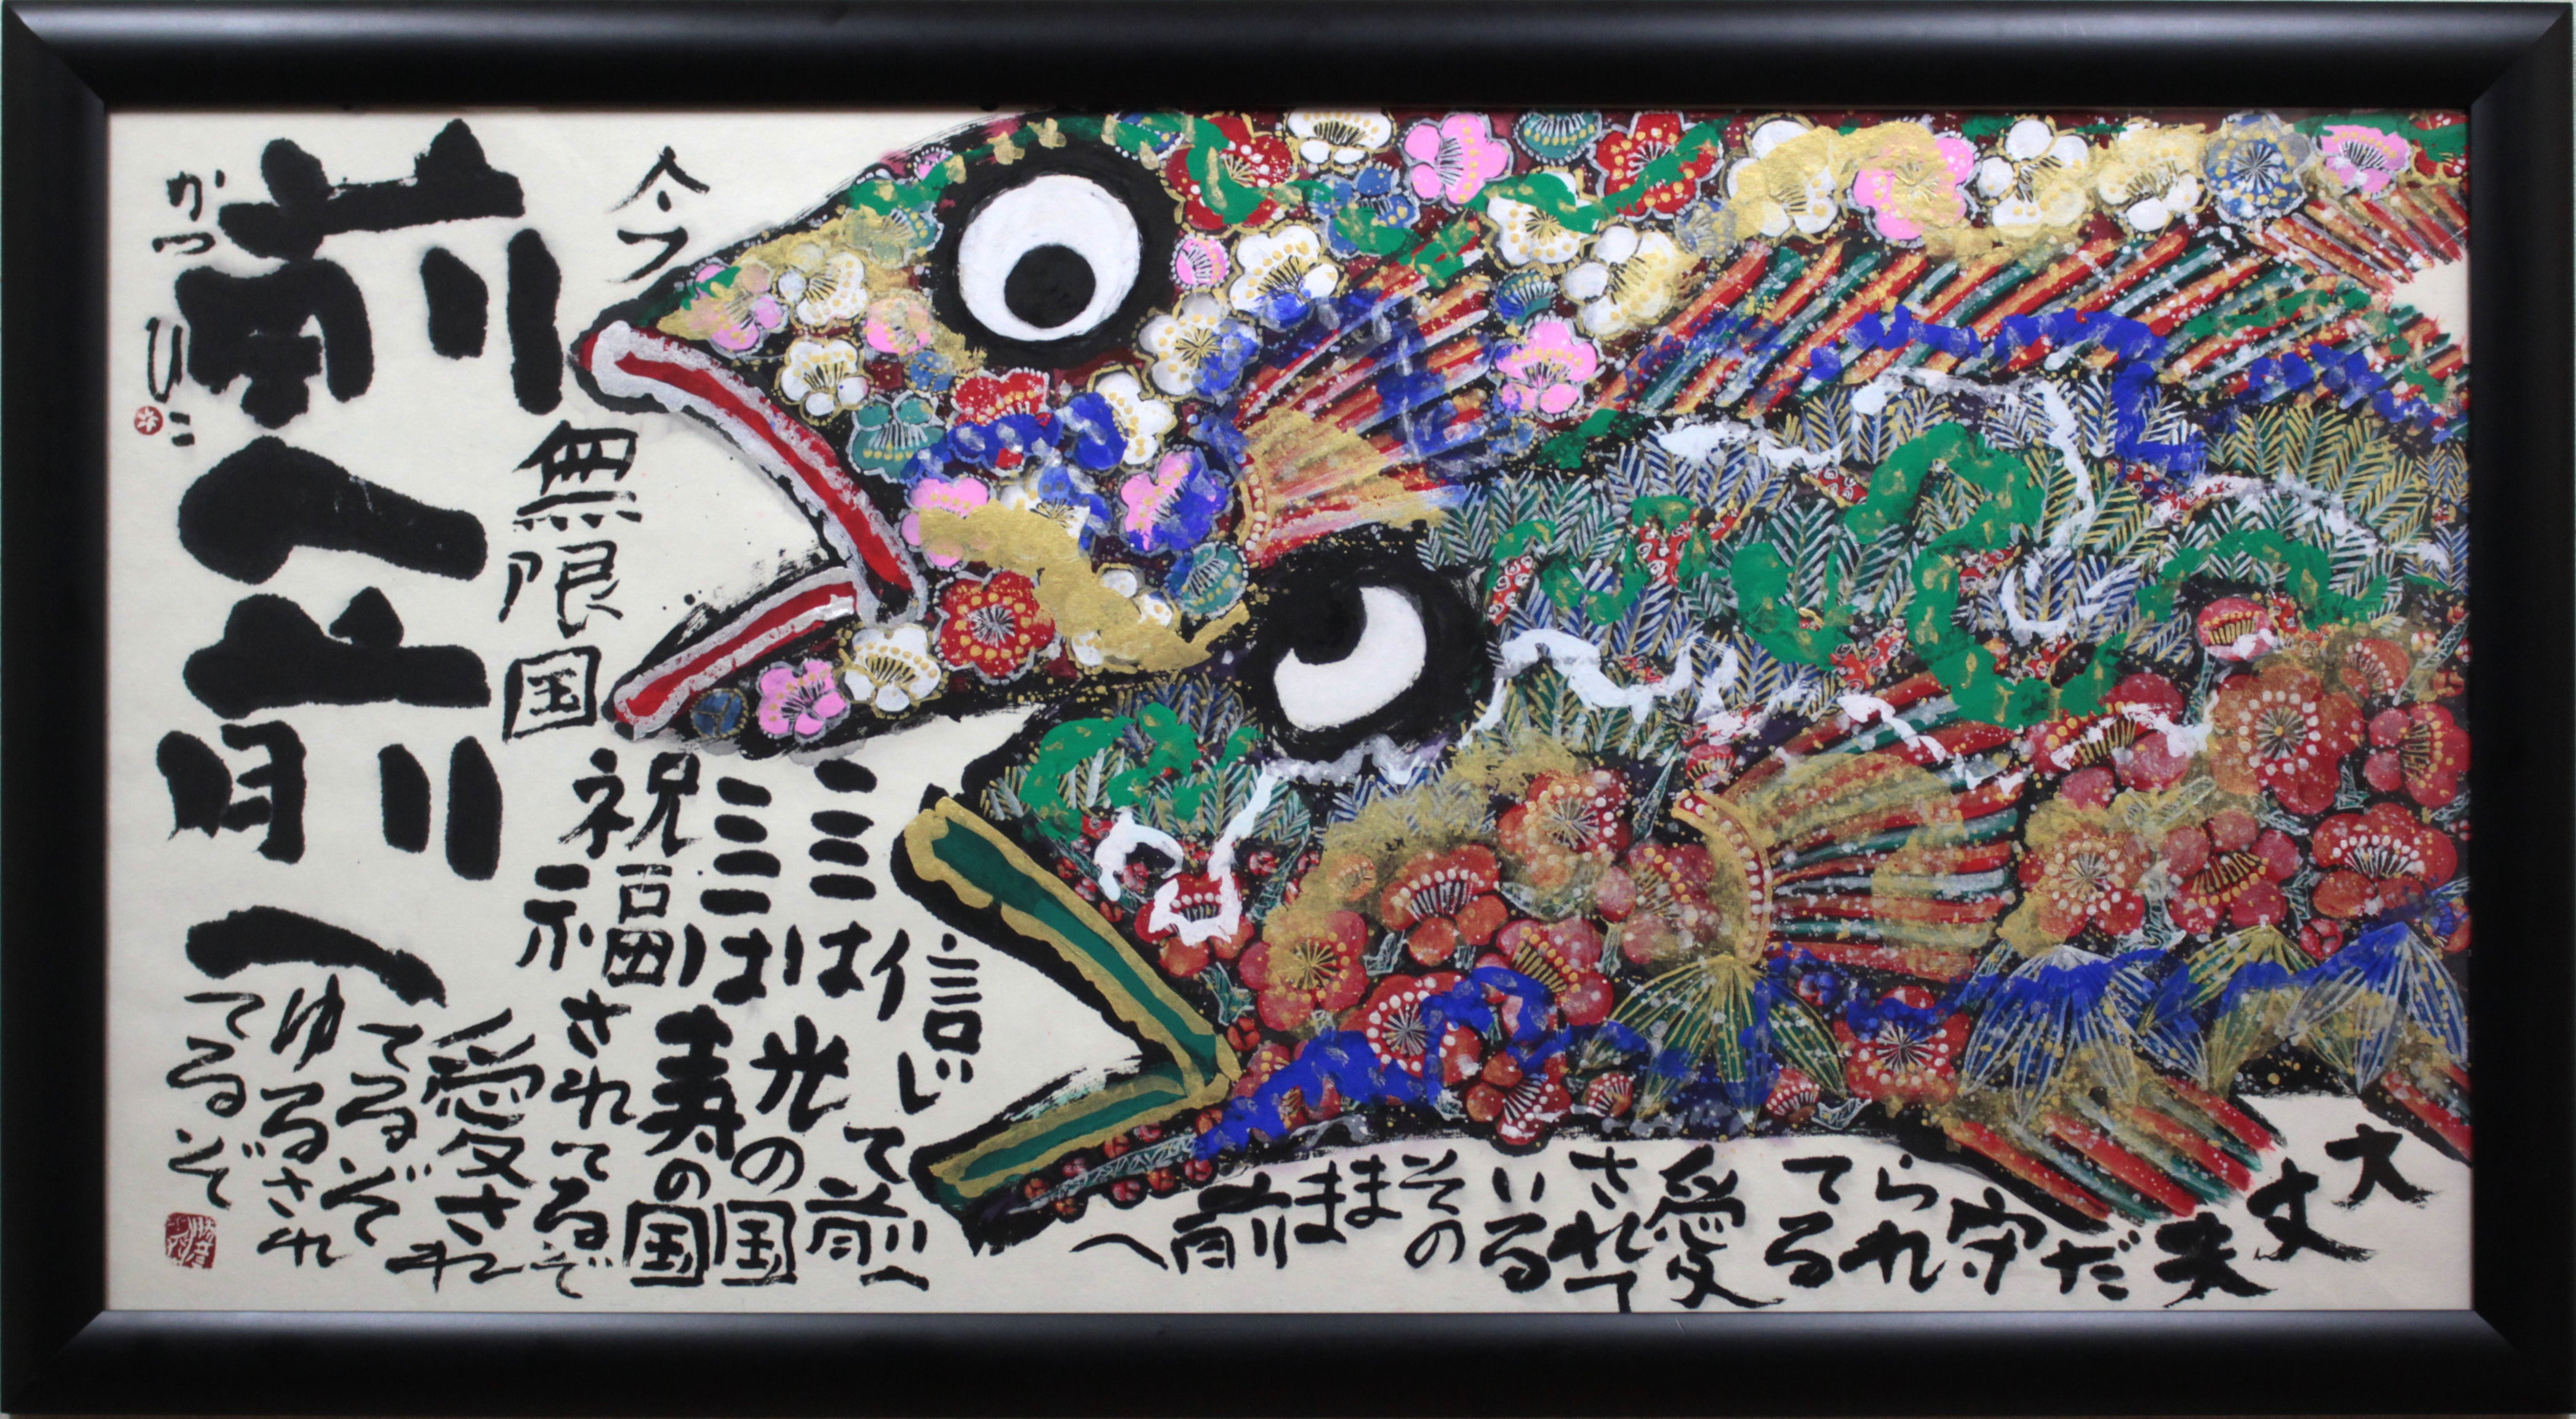 佐藤勝彦『前へ前へ』 – 北海道画廊